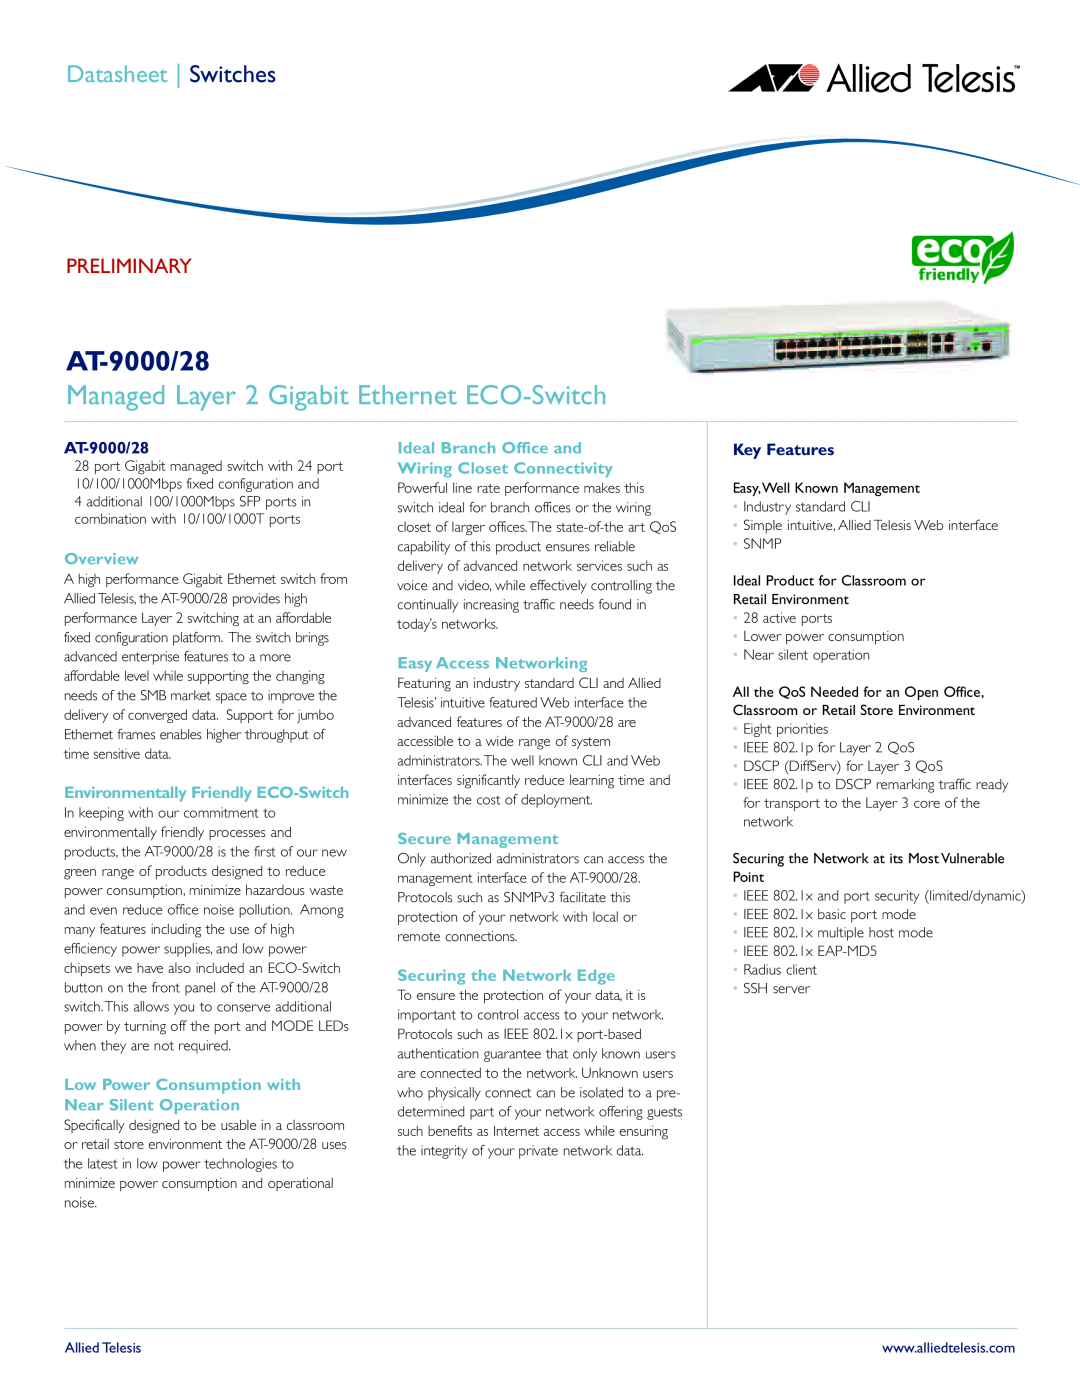 Allied Telesis manual Managed Layer 2 Gigabit Ethernet ECO-Switch, AT-9000/28, Key Features, Datasheet Switches 